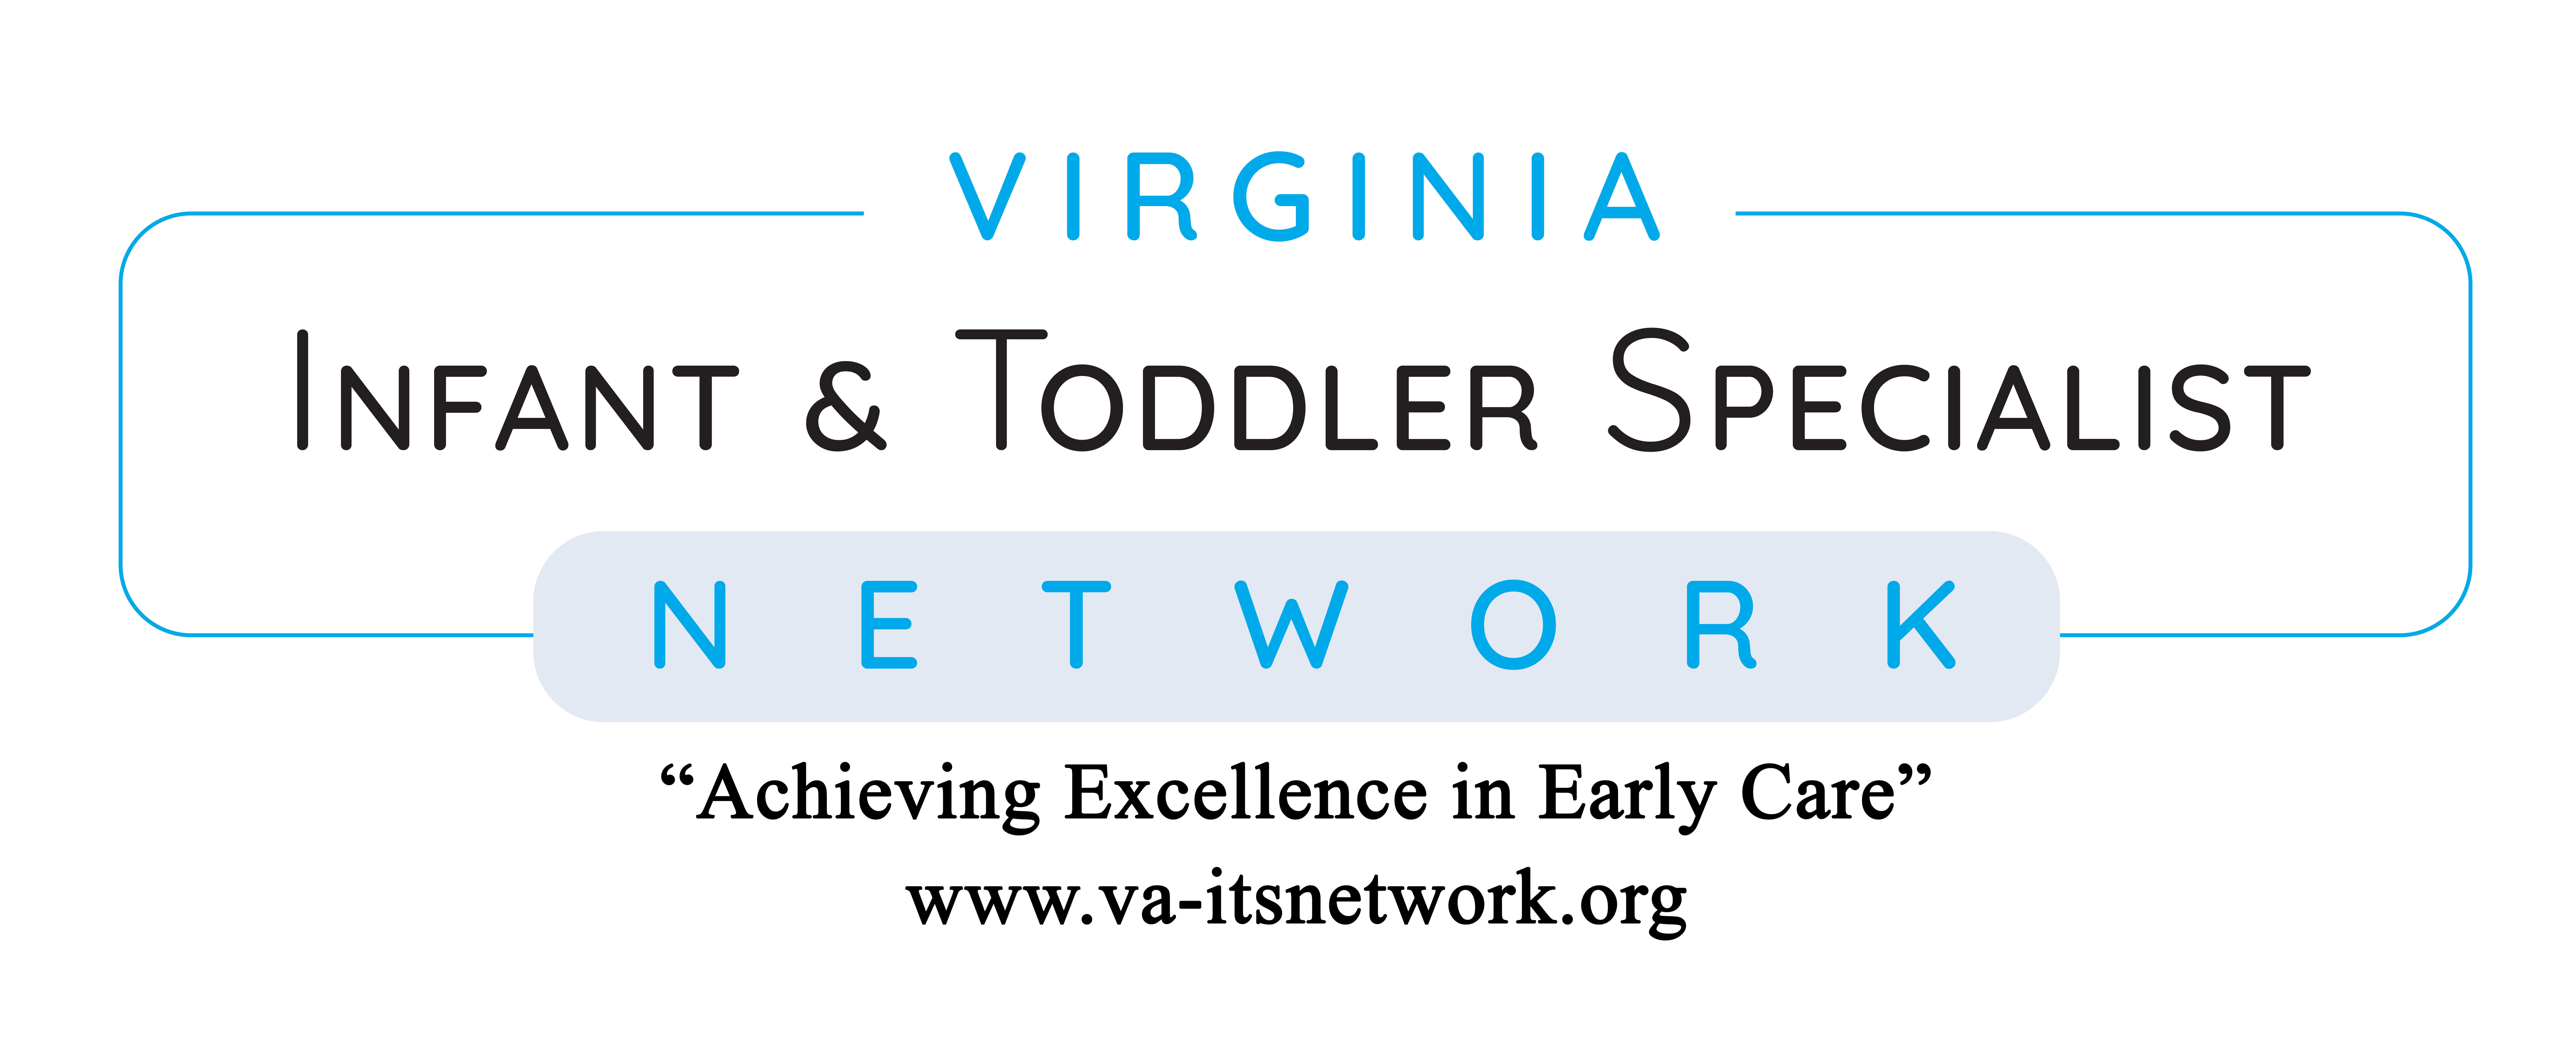 Virginia Infant & Toddler Specialist Network logo